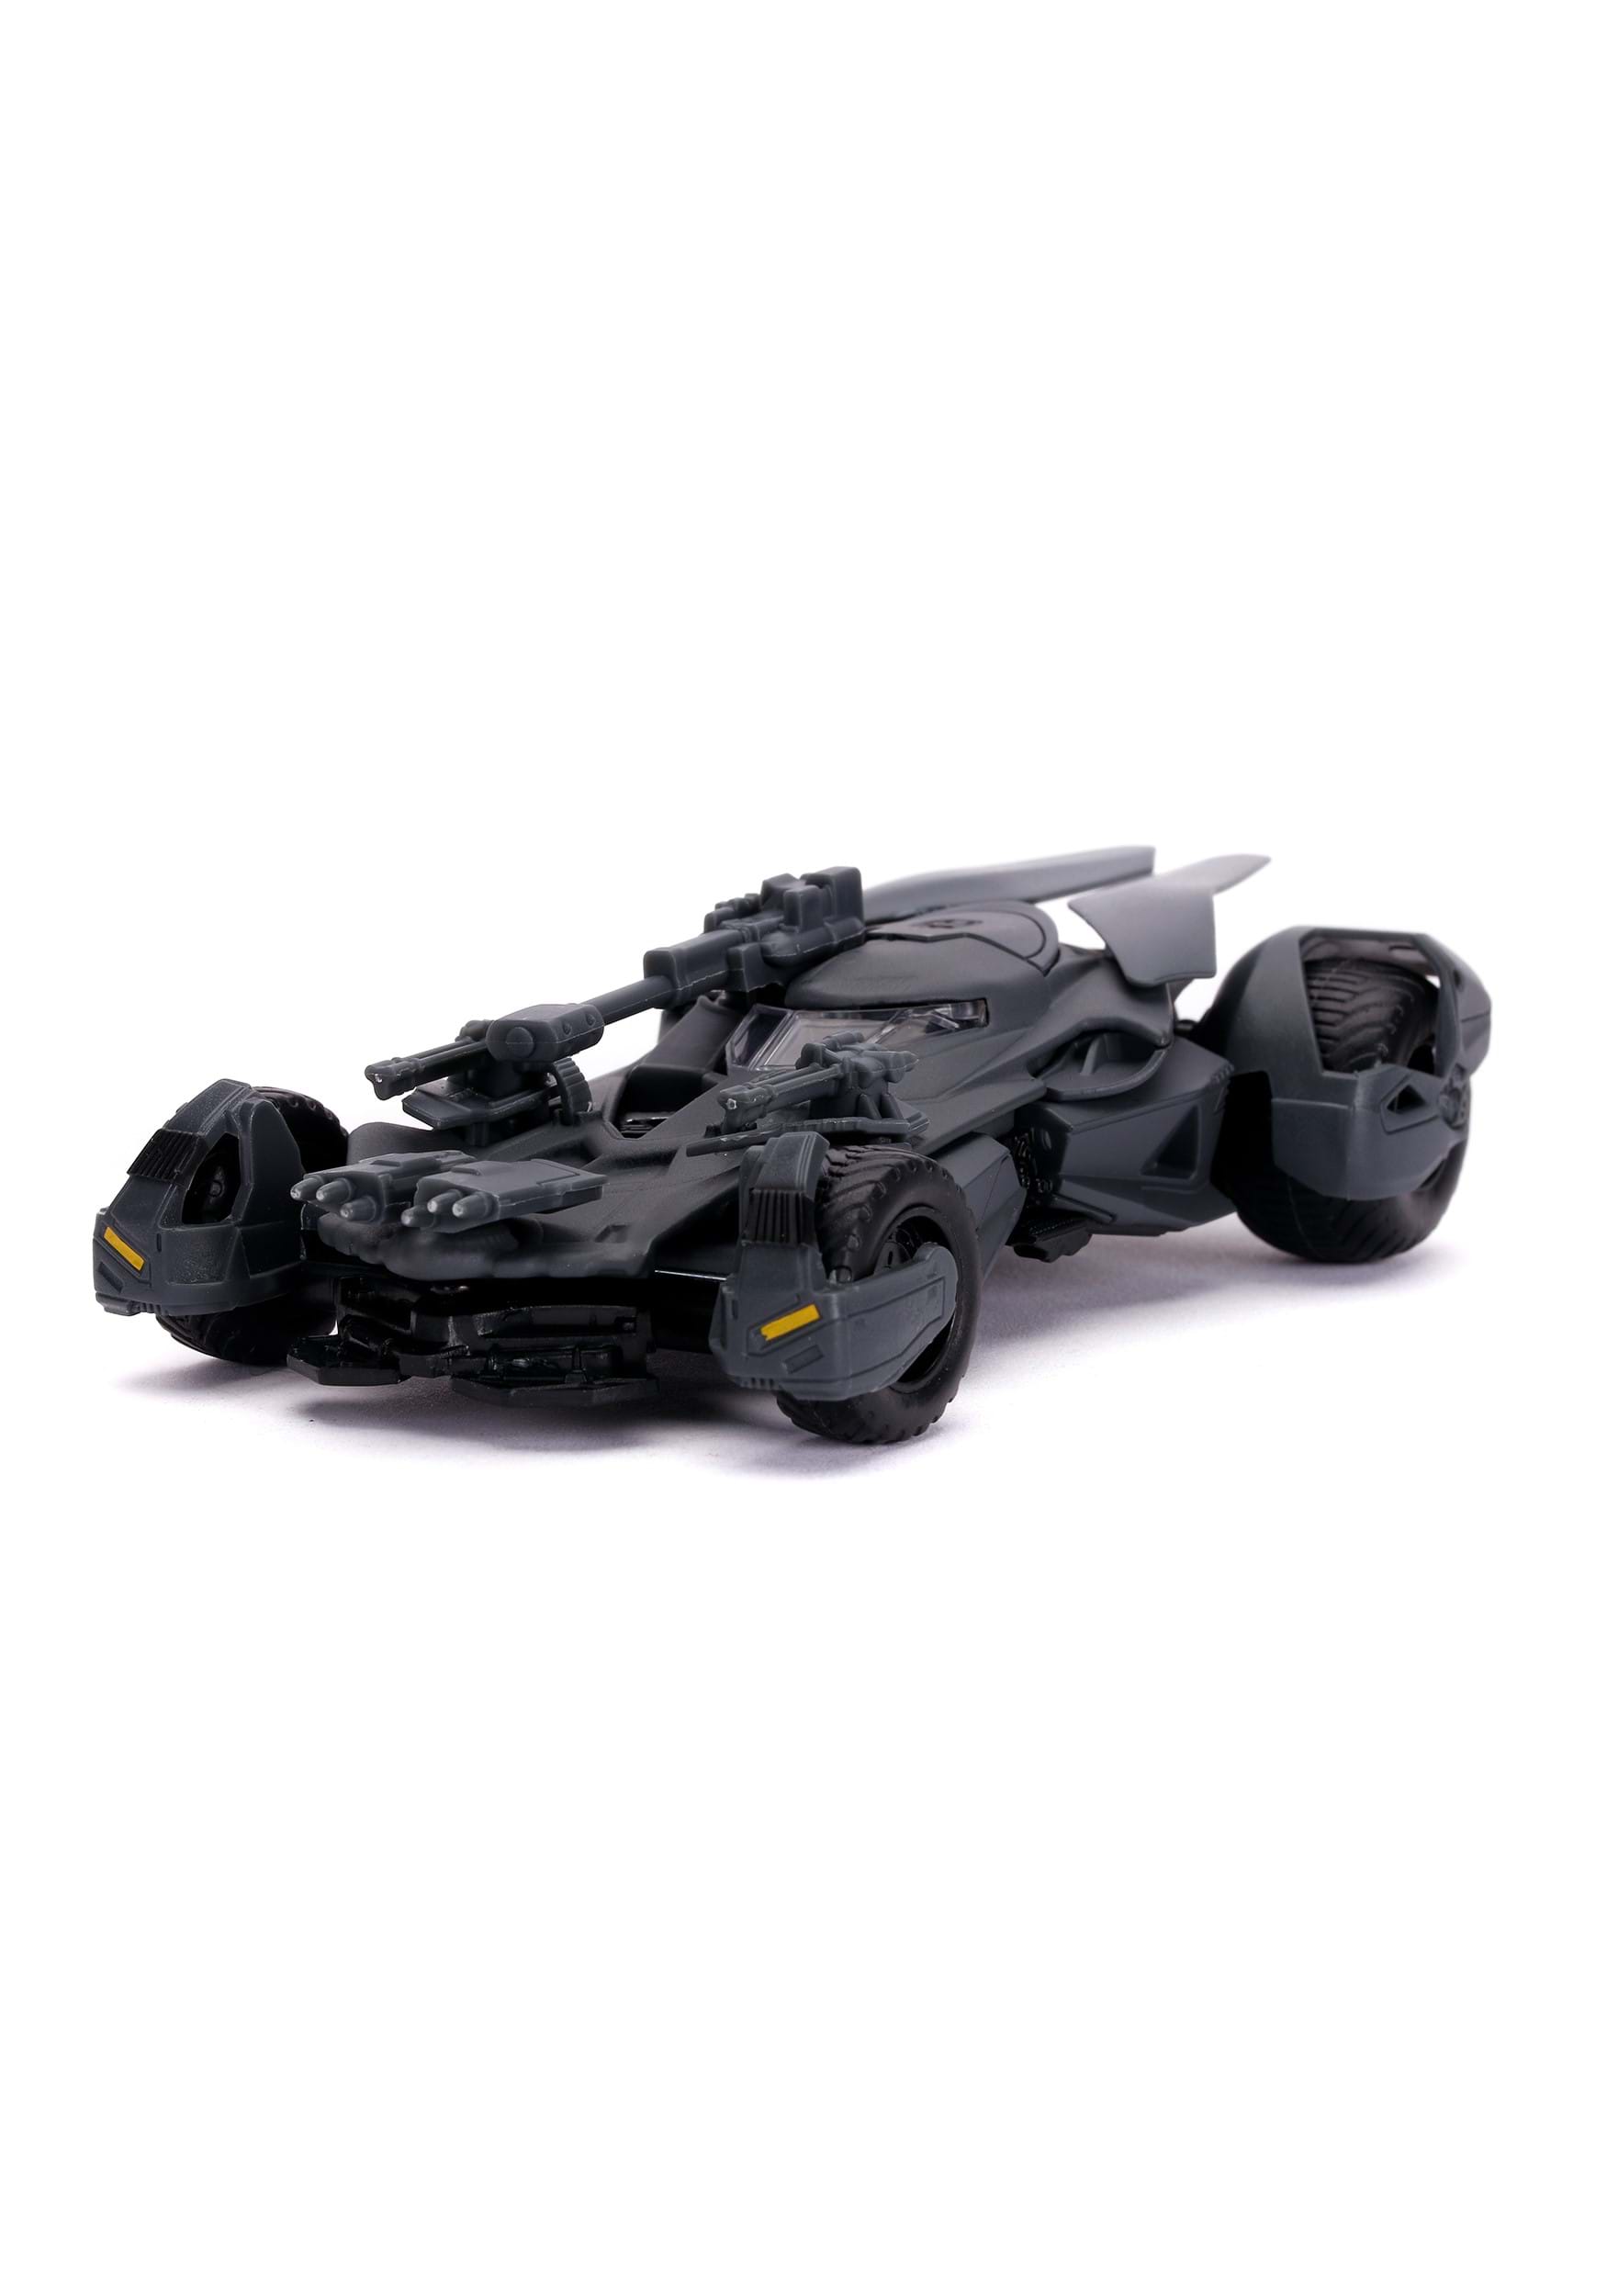 1:32 Scale Batman Justice League Batmobile W/ Batman Figure